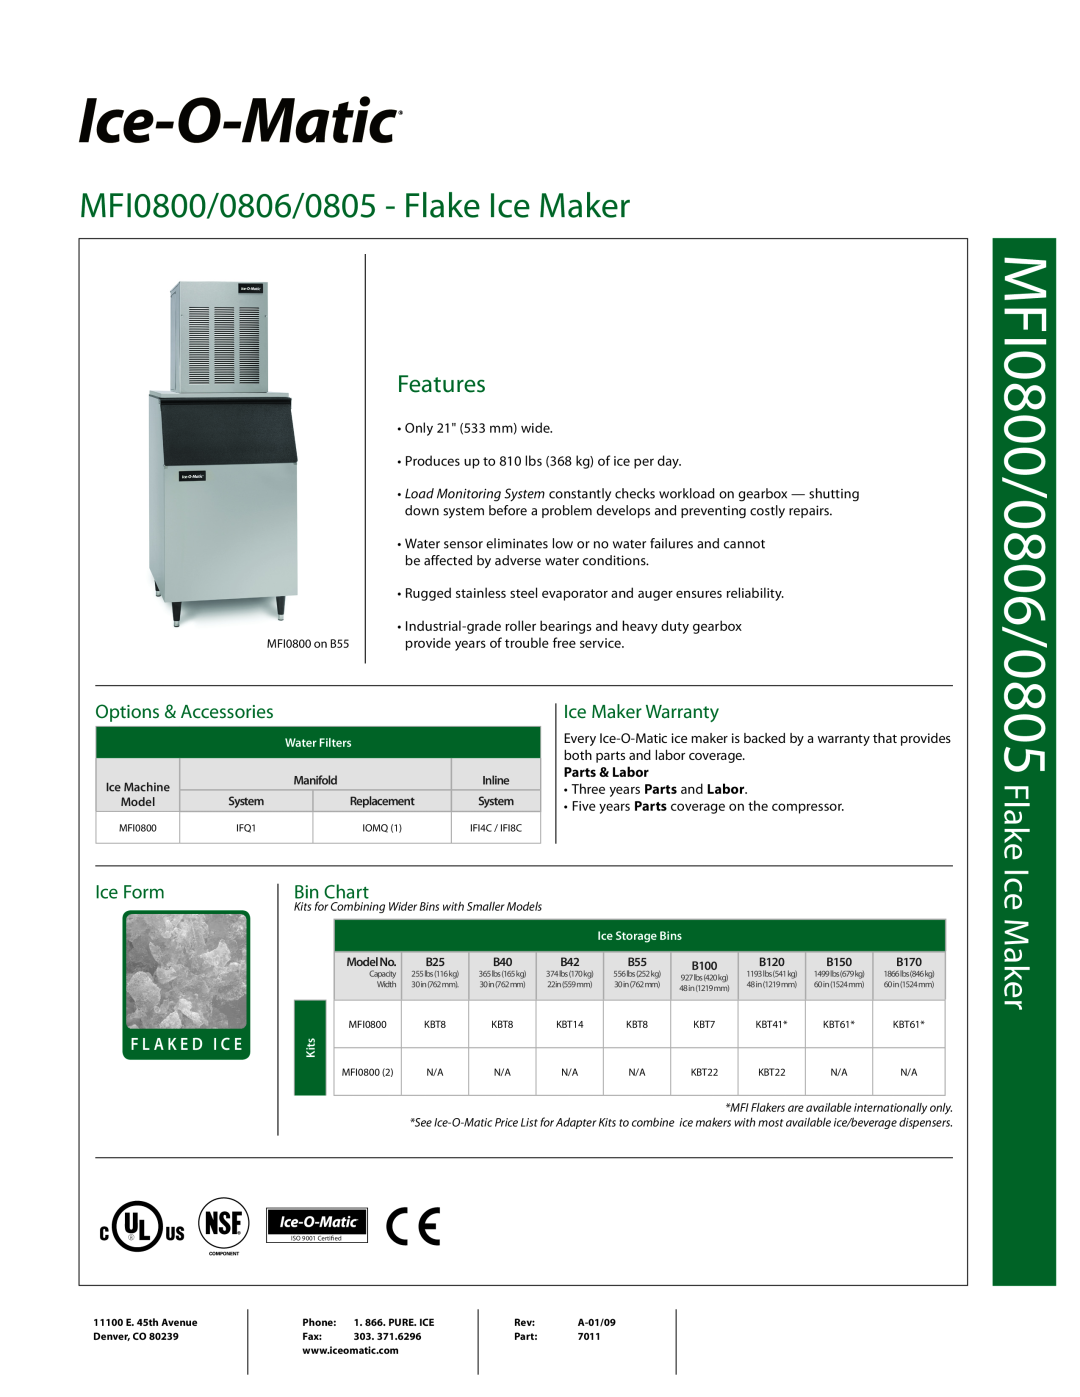 Ice-O-Matic MFI0805 warranty Options & Accessories, Ice Maker Warranty, Ice Form, Bin Chart, MFI0800/0806/0805, Flake 